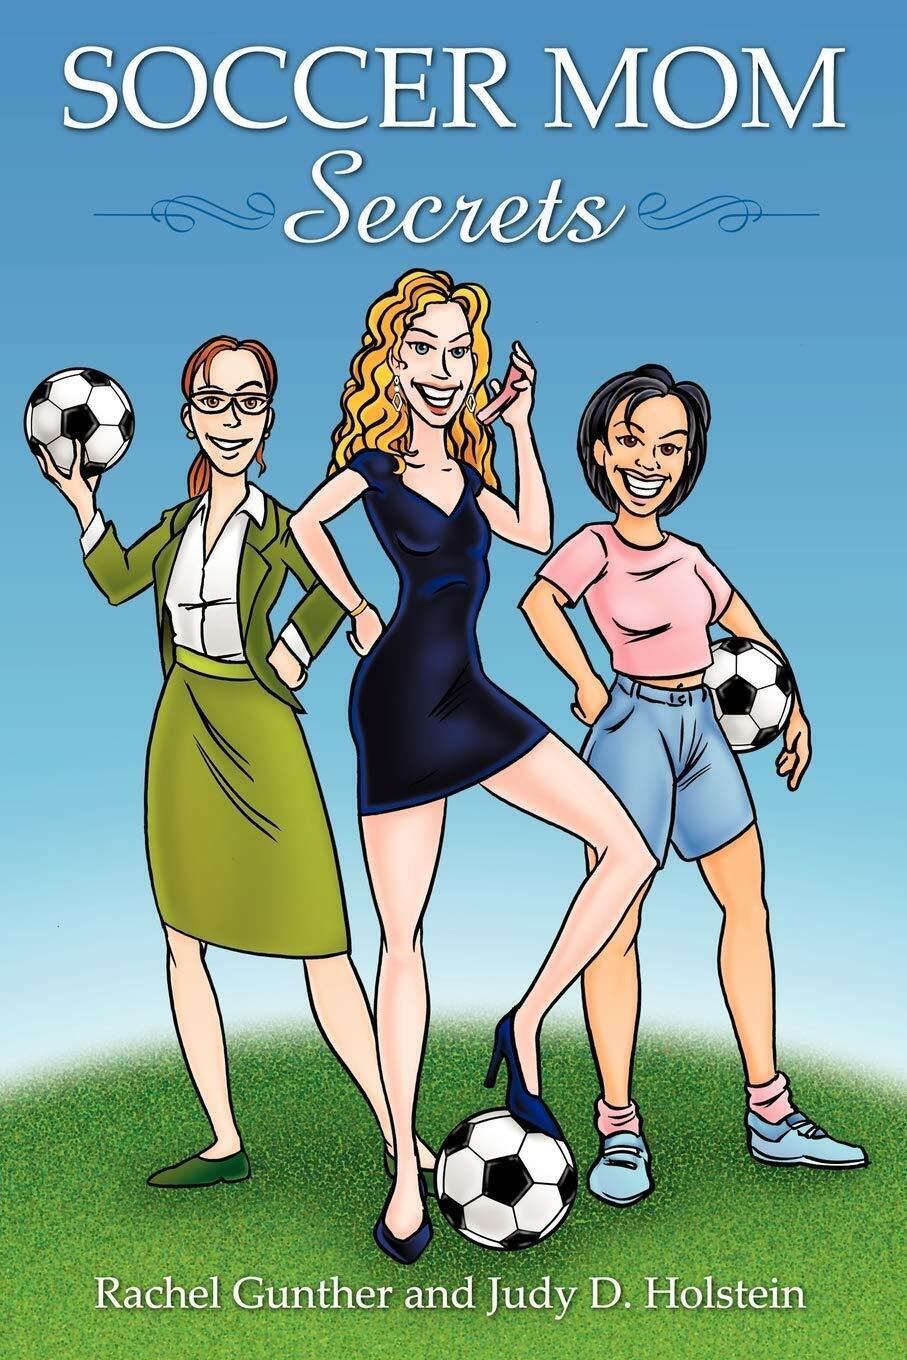 Soccer Mom Secrets - Rachel Gunther, Judy D. Holstein - AuthorHouse, 2007